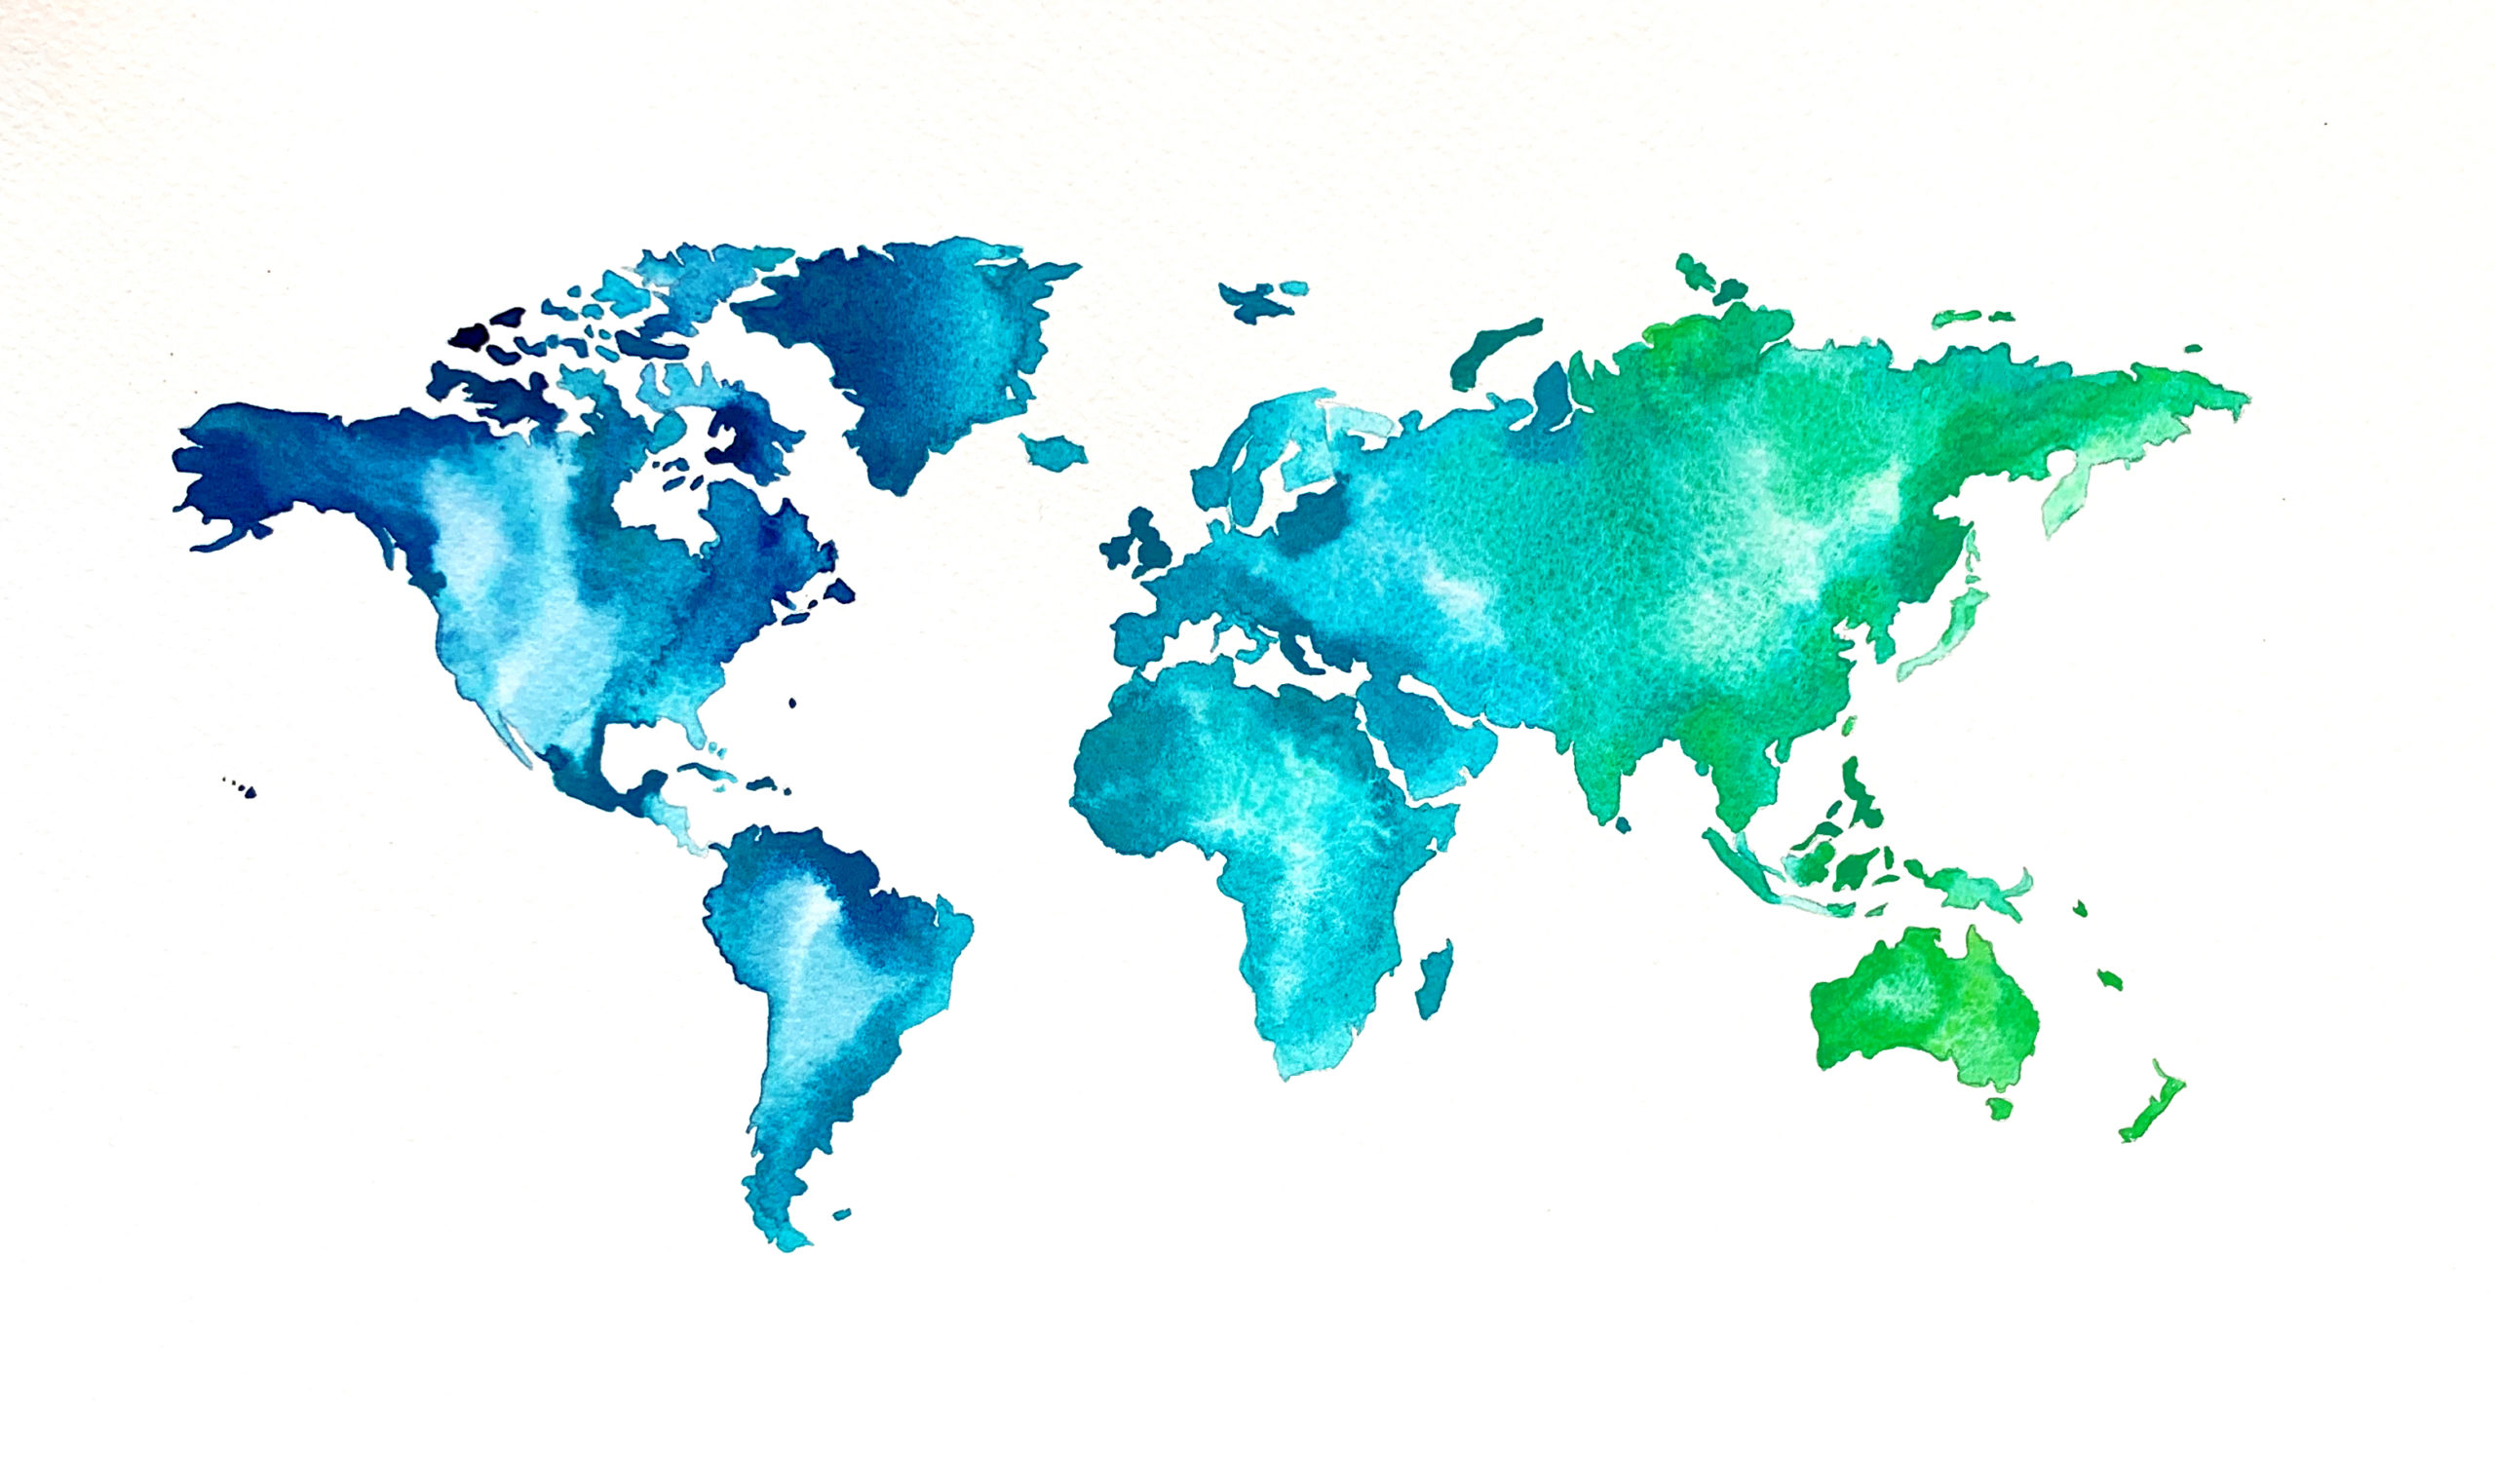 Blank World Map Ms Paint